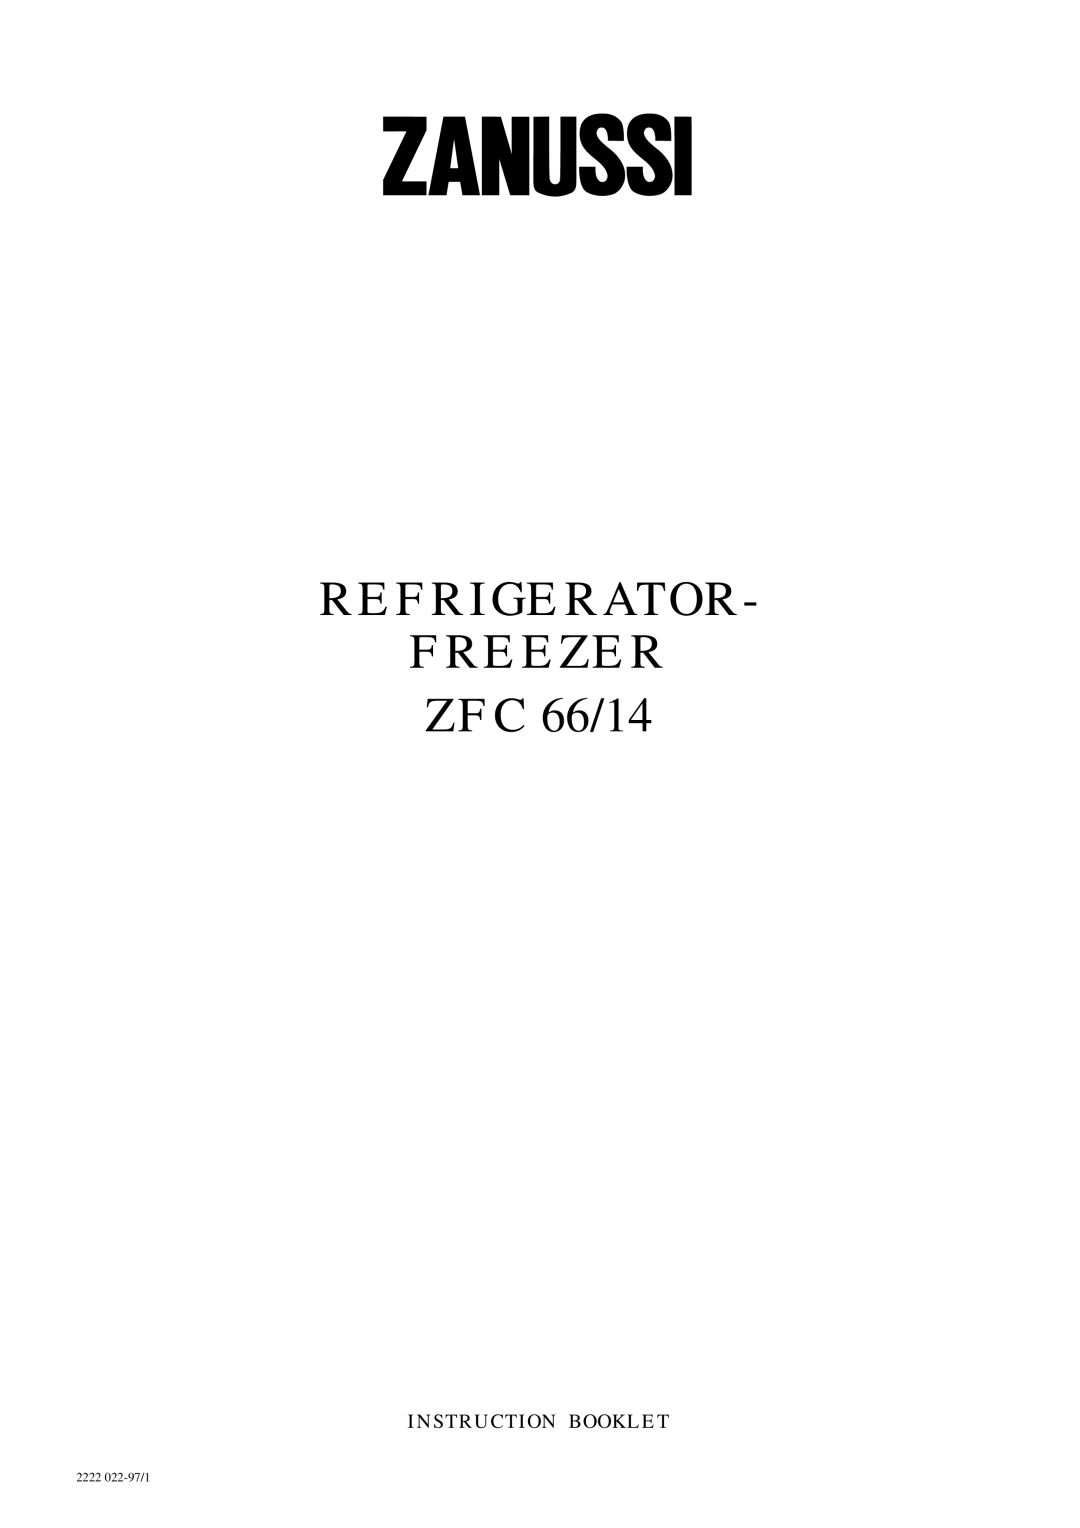 Zanussi manual REFRIGERATOR FREEZER ZFC 66/14, Instruction Booklet, 2222 022-97/1 